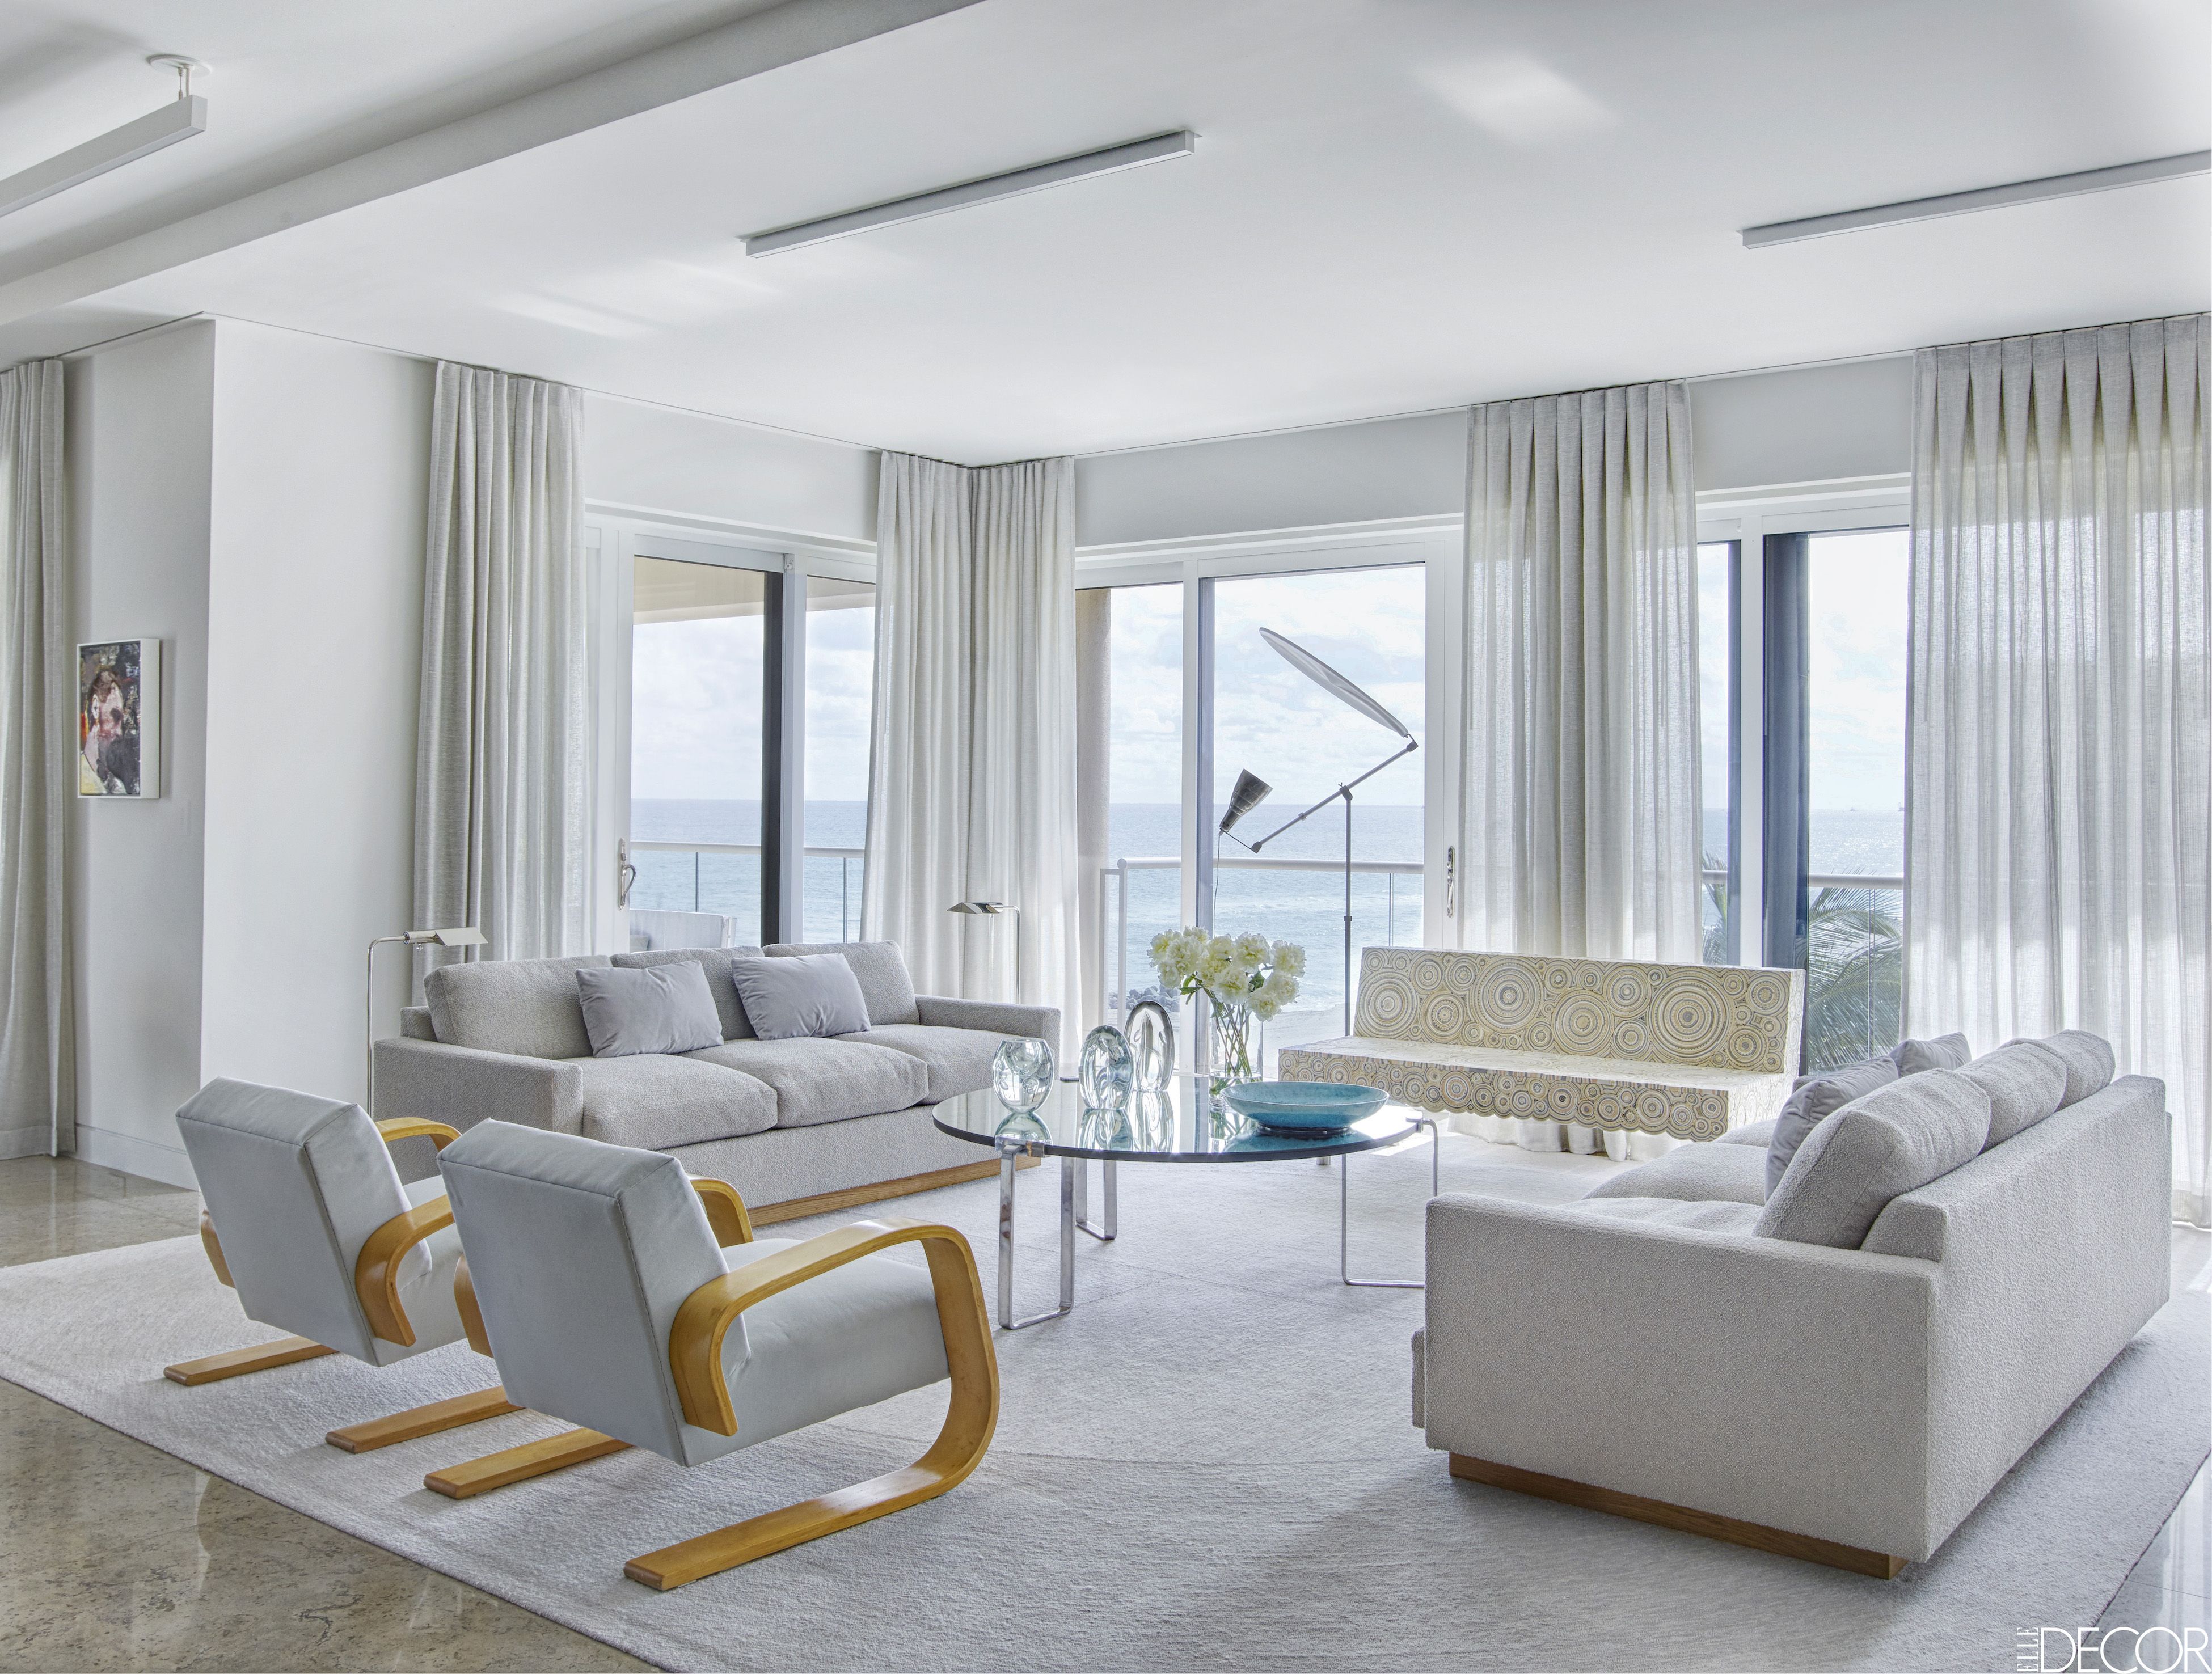 54 Luxury Living Room Ideas Stylish Living Room Design Photos,Green Grasshopper With Stinger